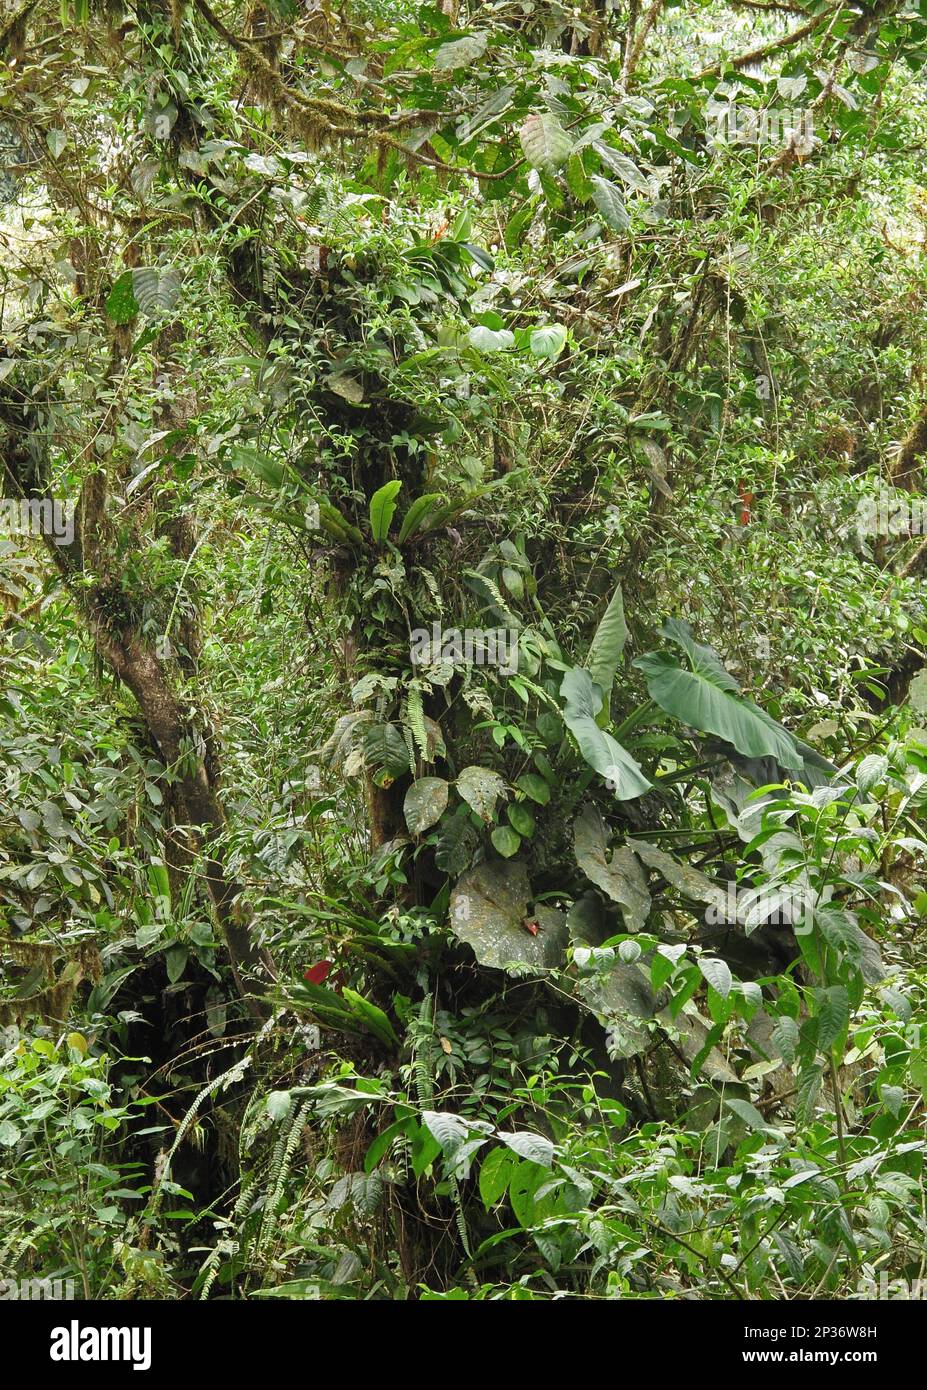 Lush vegetation in tropical forest habitat, Canopy Lodge, El Valle, Panama Stock Photo